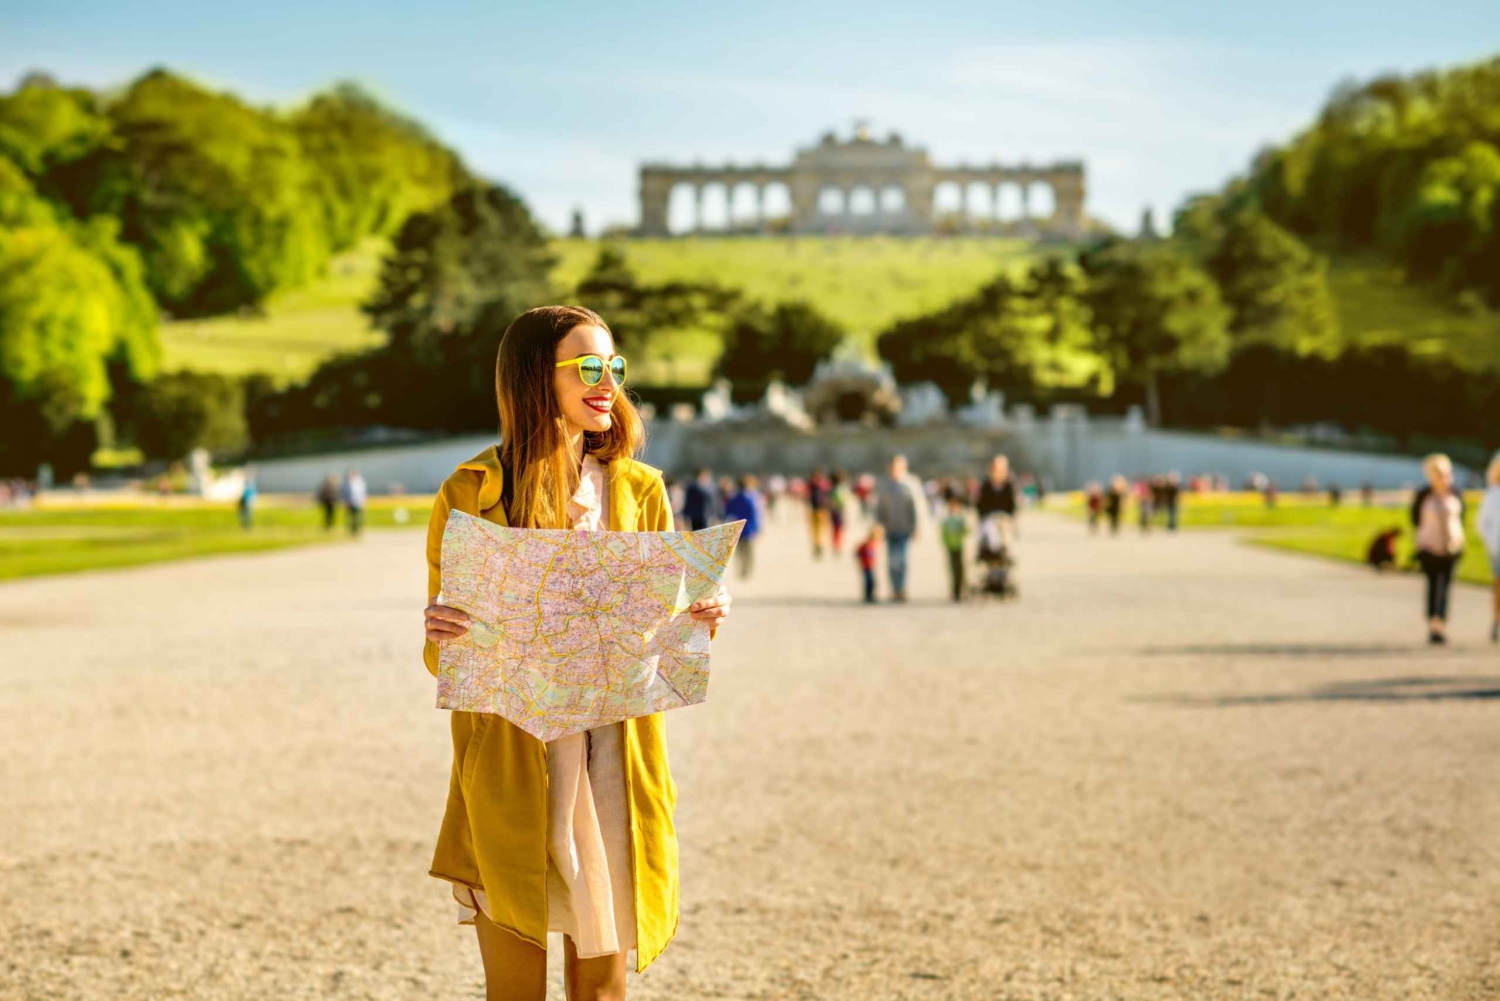 Wien: privat rundtur i slottet Schonbrunn utan att gå på linjen